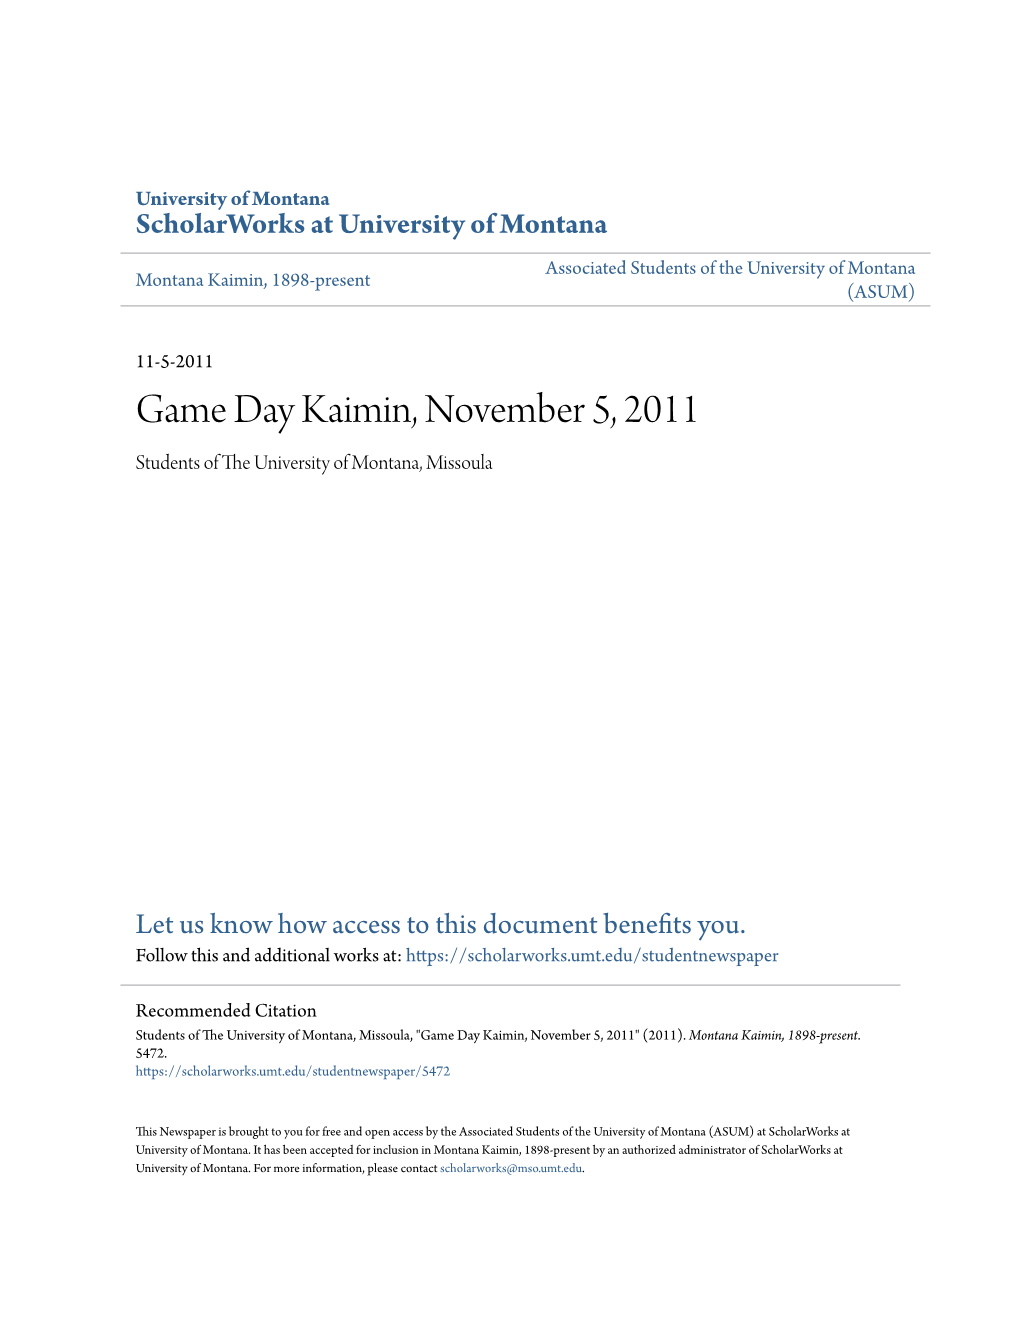 Game Day Kaimin, November 5, 2011 Students of the Niu Versity of Montana, Missoula